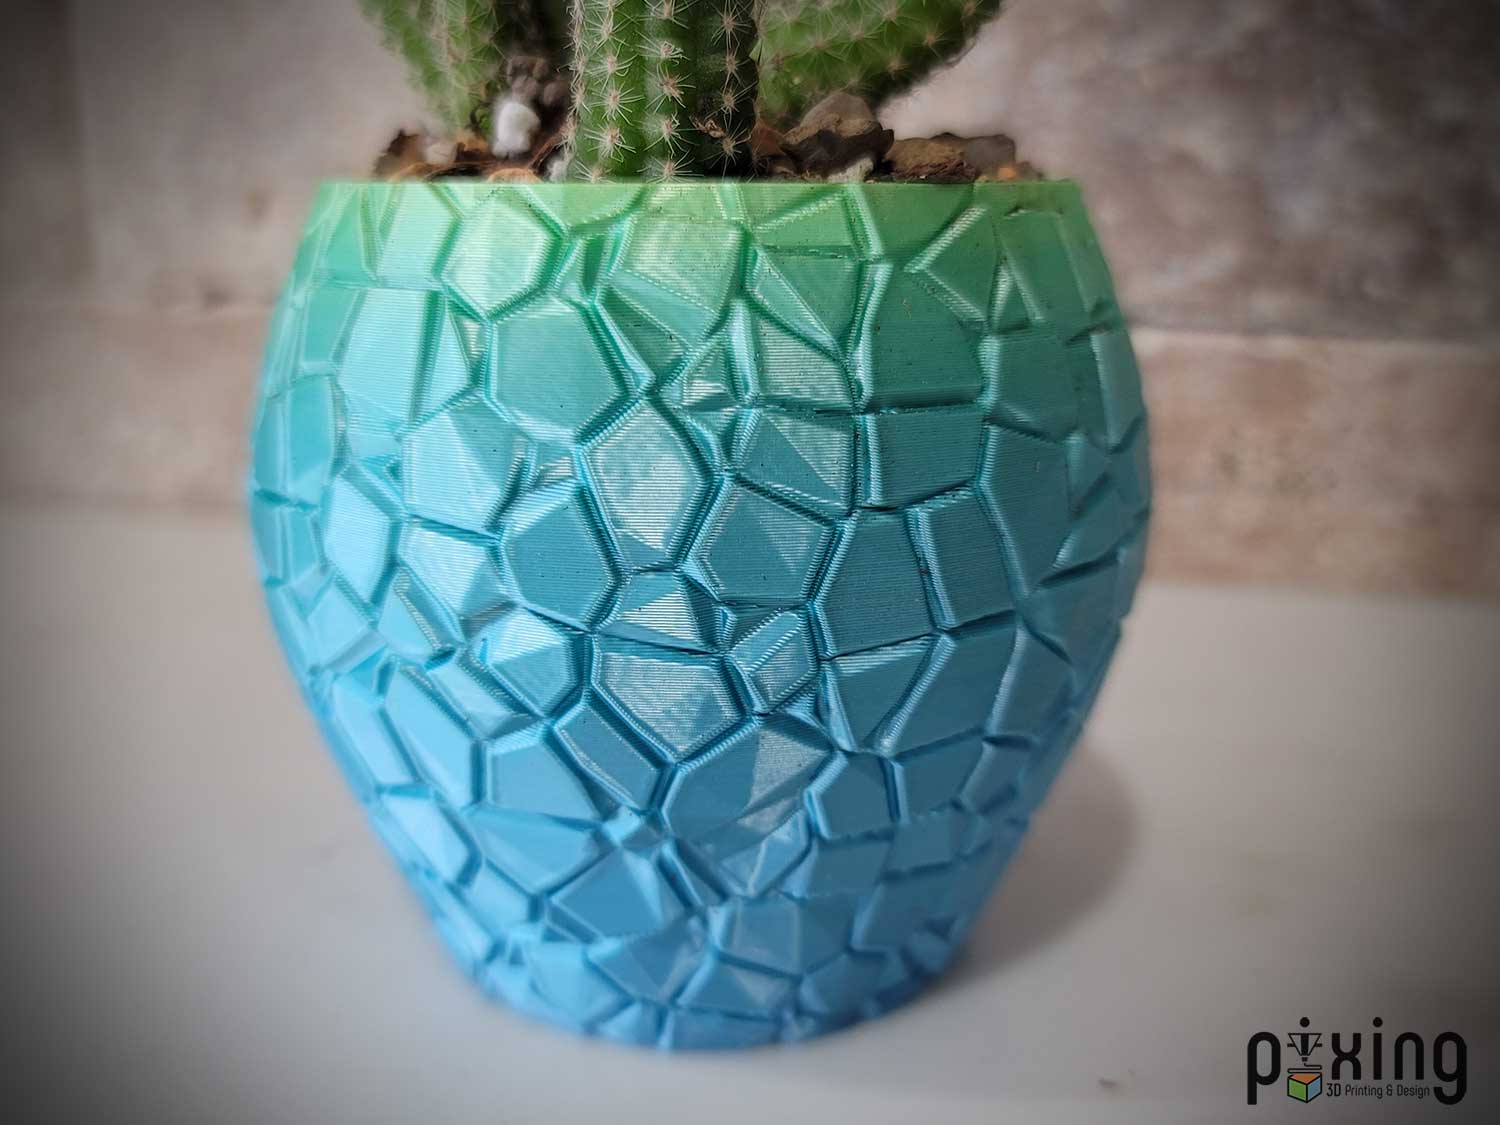 Mosaic-Pot-Planter-Side2